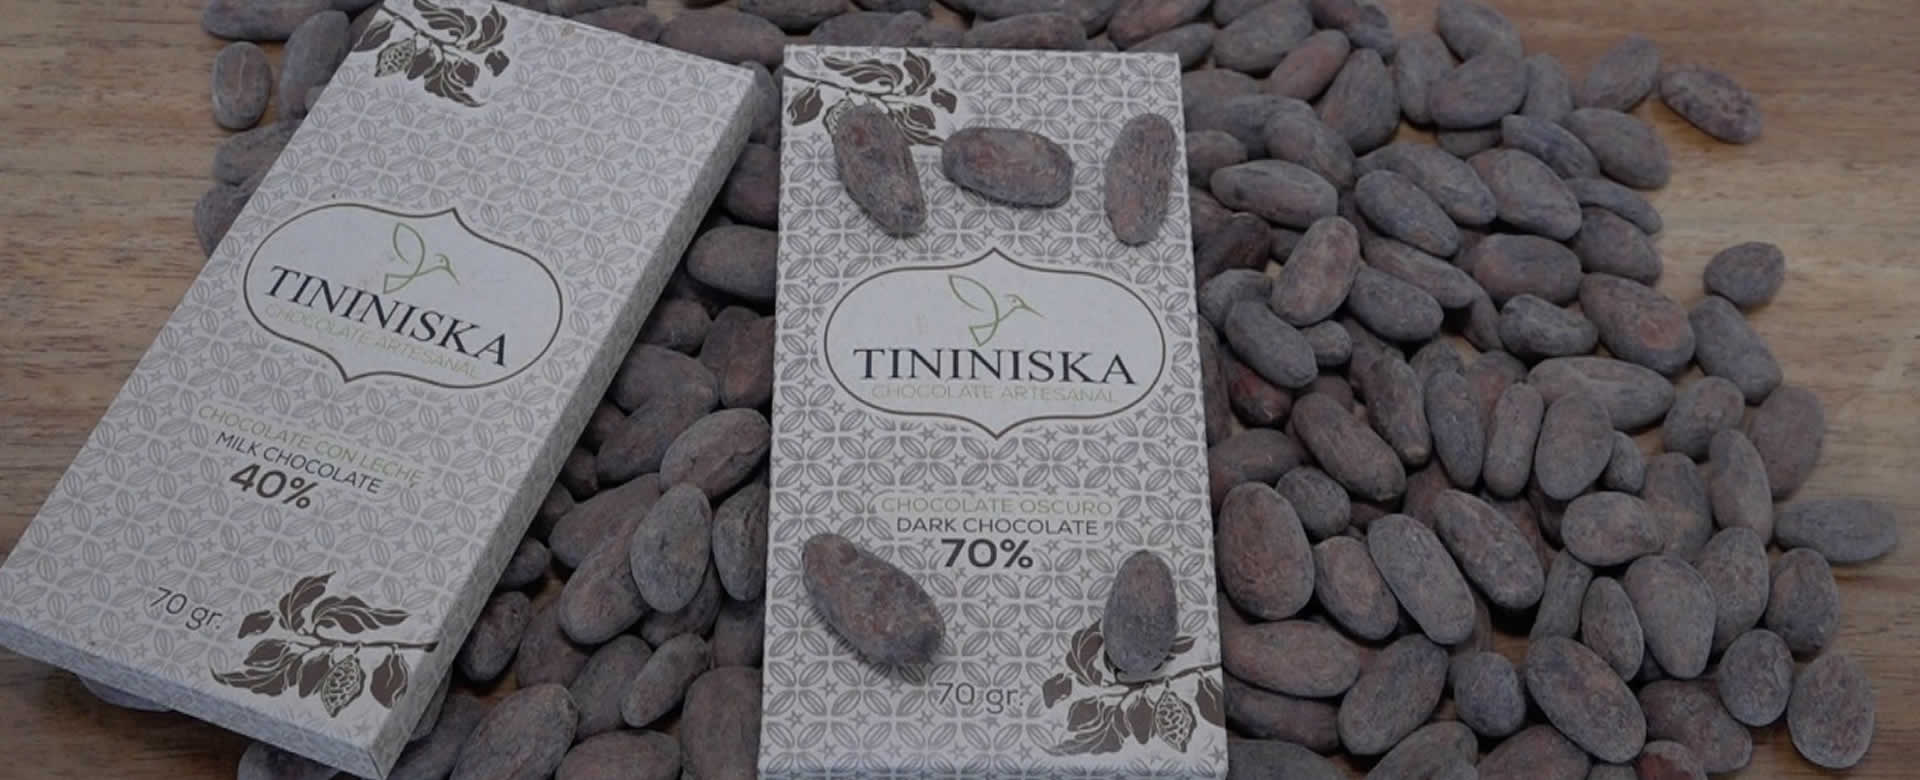 Chocolate artesanal "Tininiska" conquista estándares internacionales